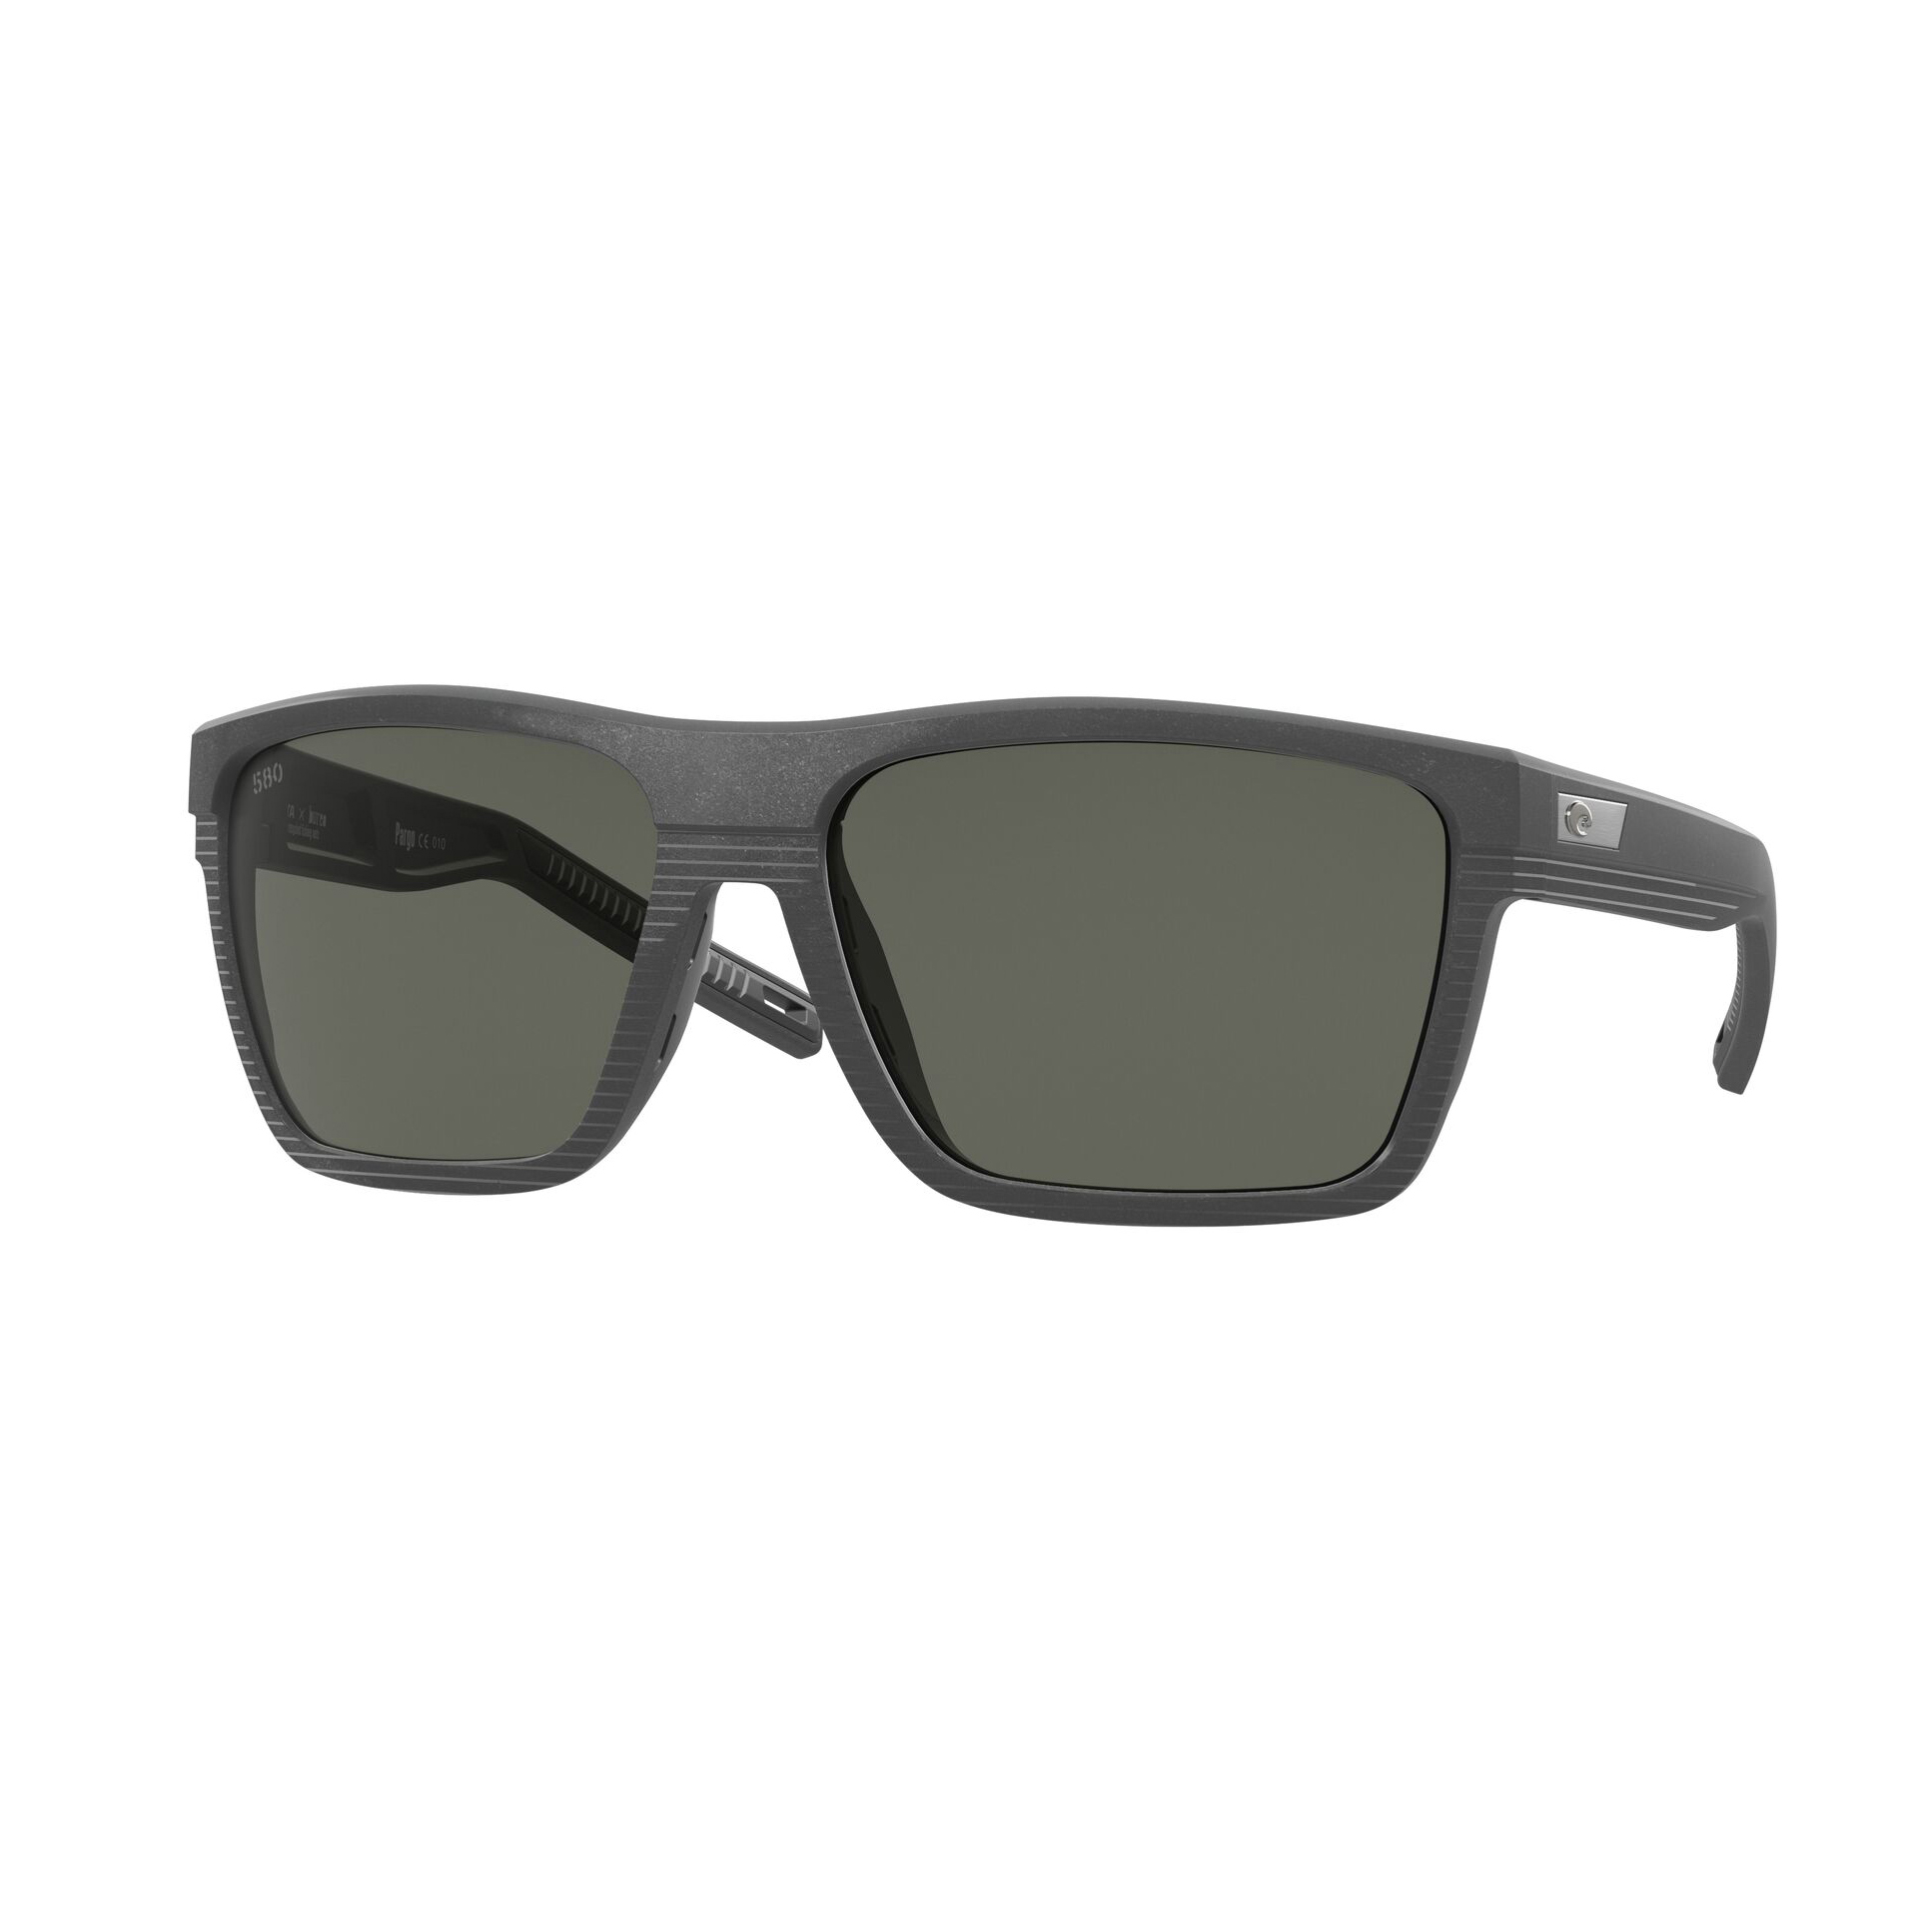 Costa Sunglasses, Pargo, Dark Grey, Grey 580G